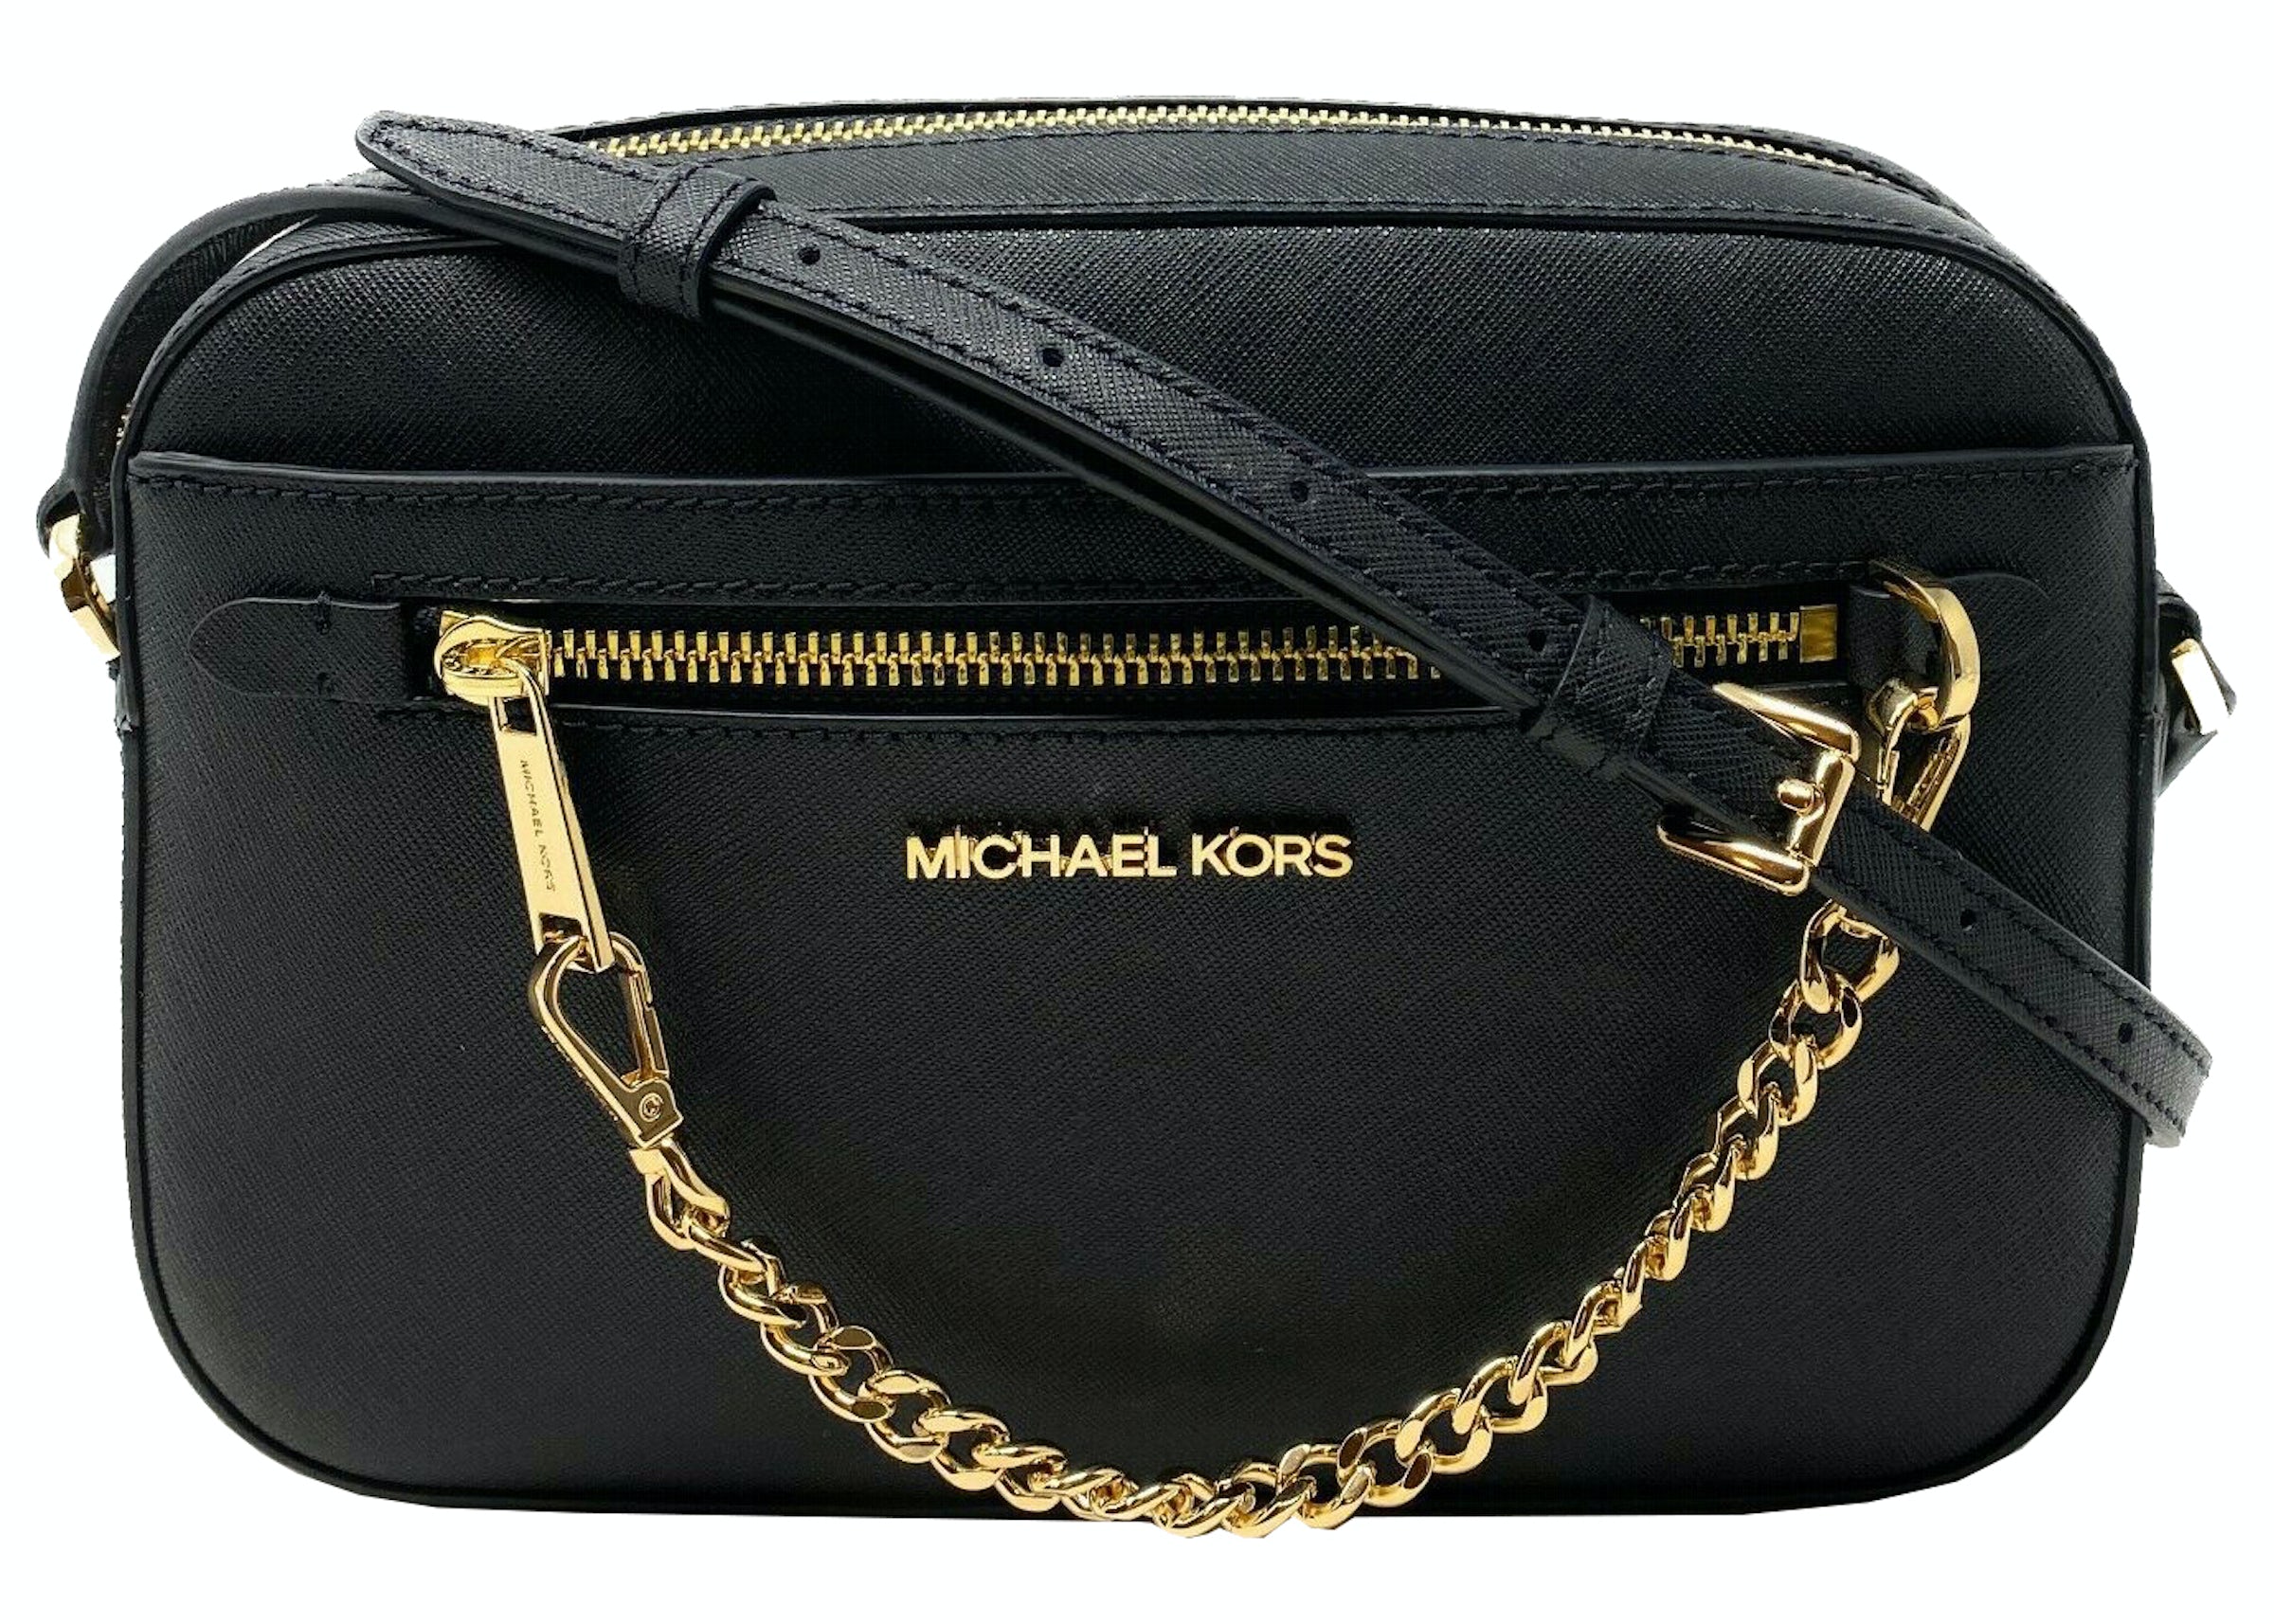 Michael Kors Jet Set Zip Chain Crossbody Bag Large Black/Gold